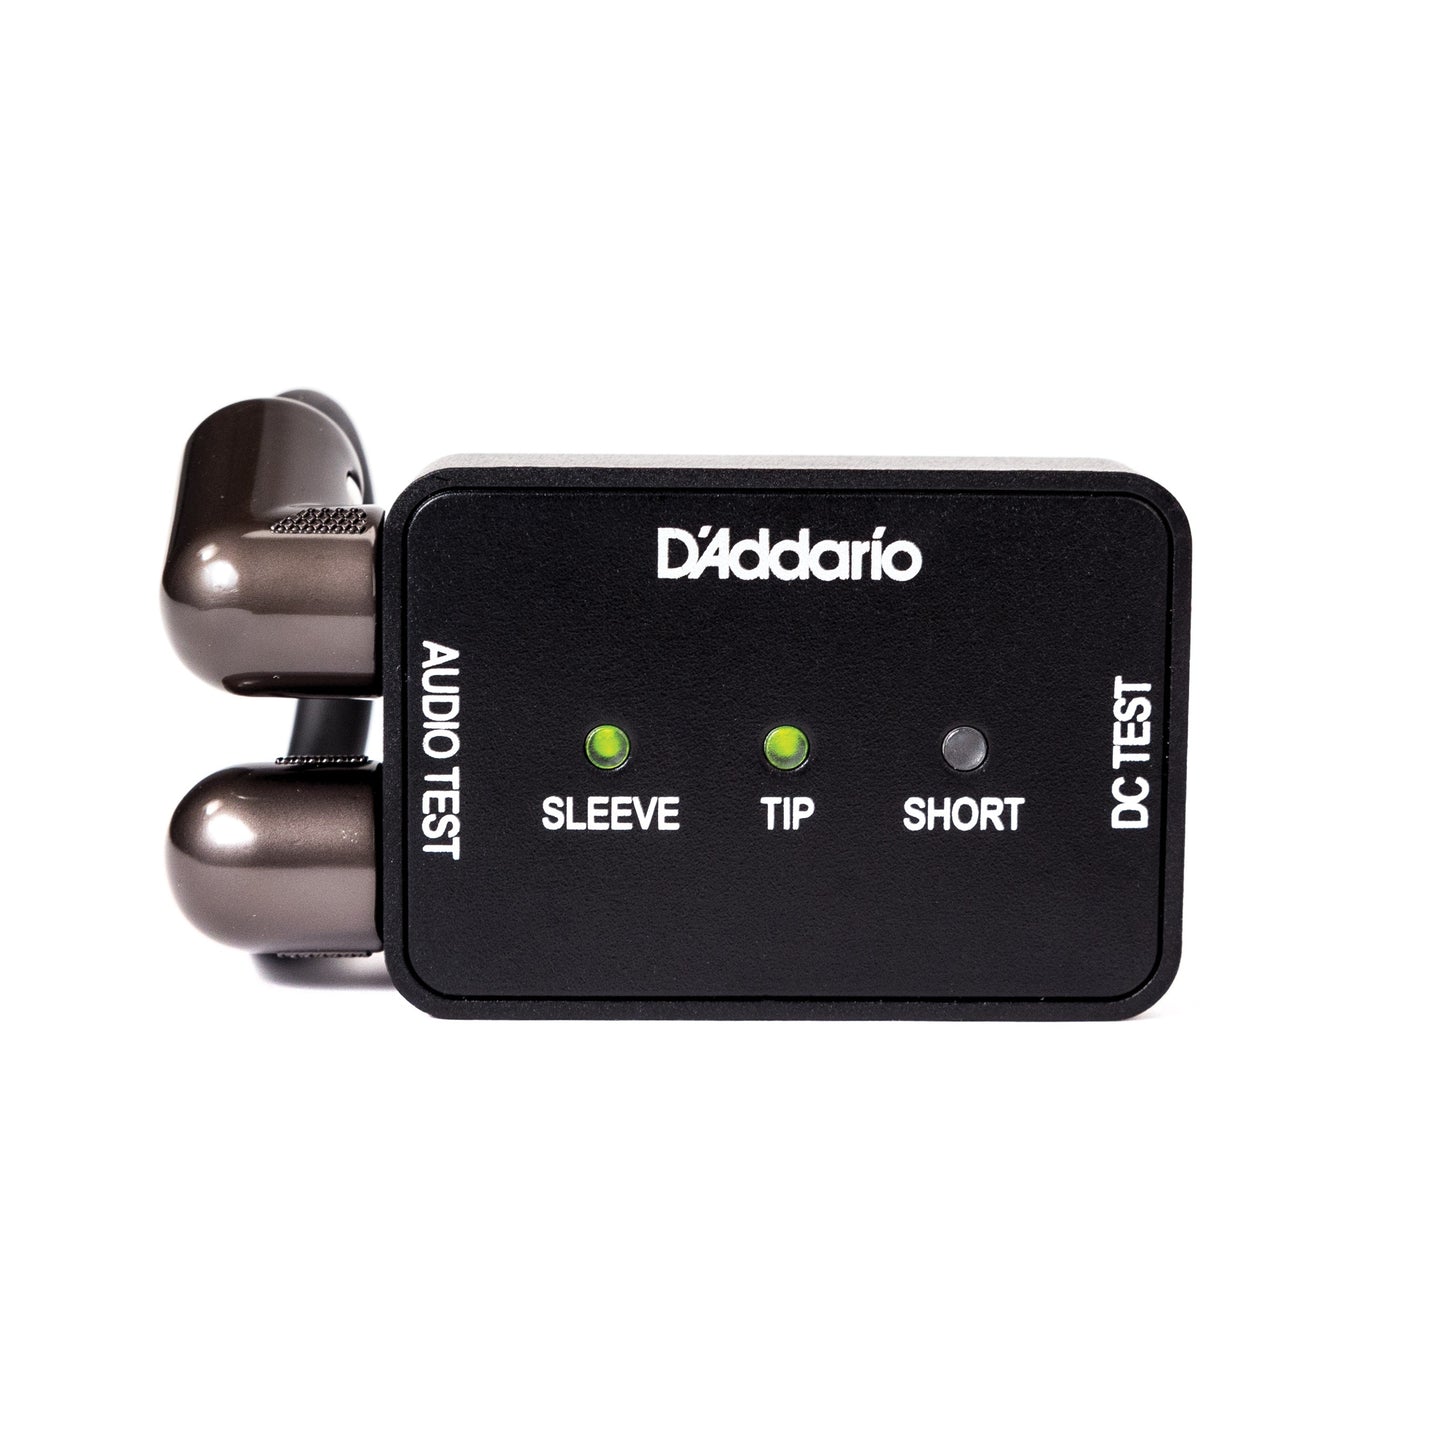 D’Addario DIY Power & Instrument Cable Tester